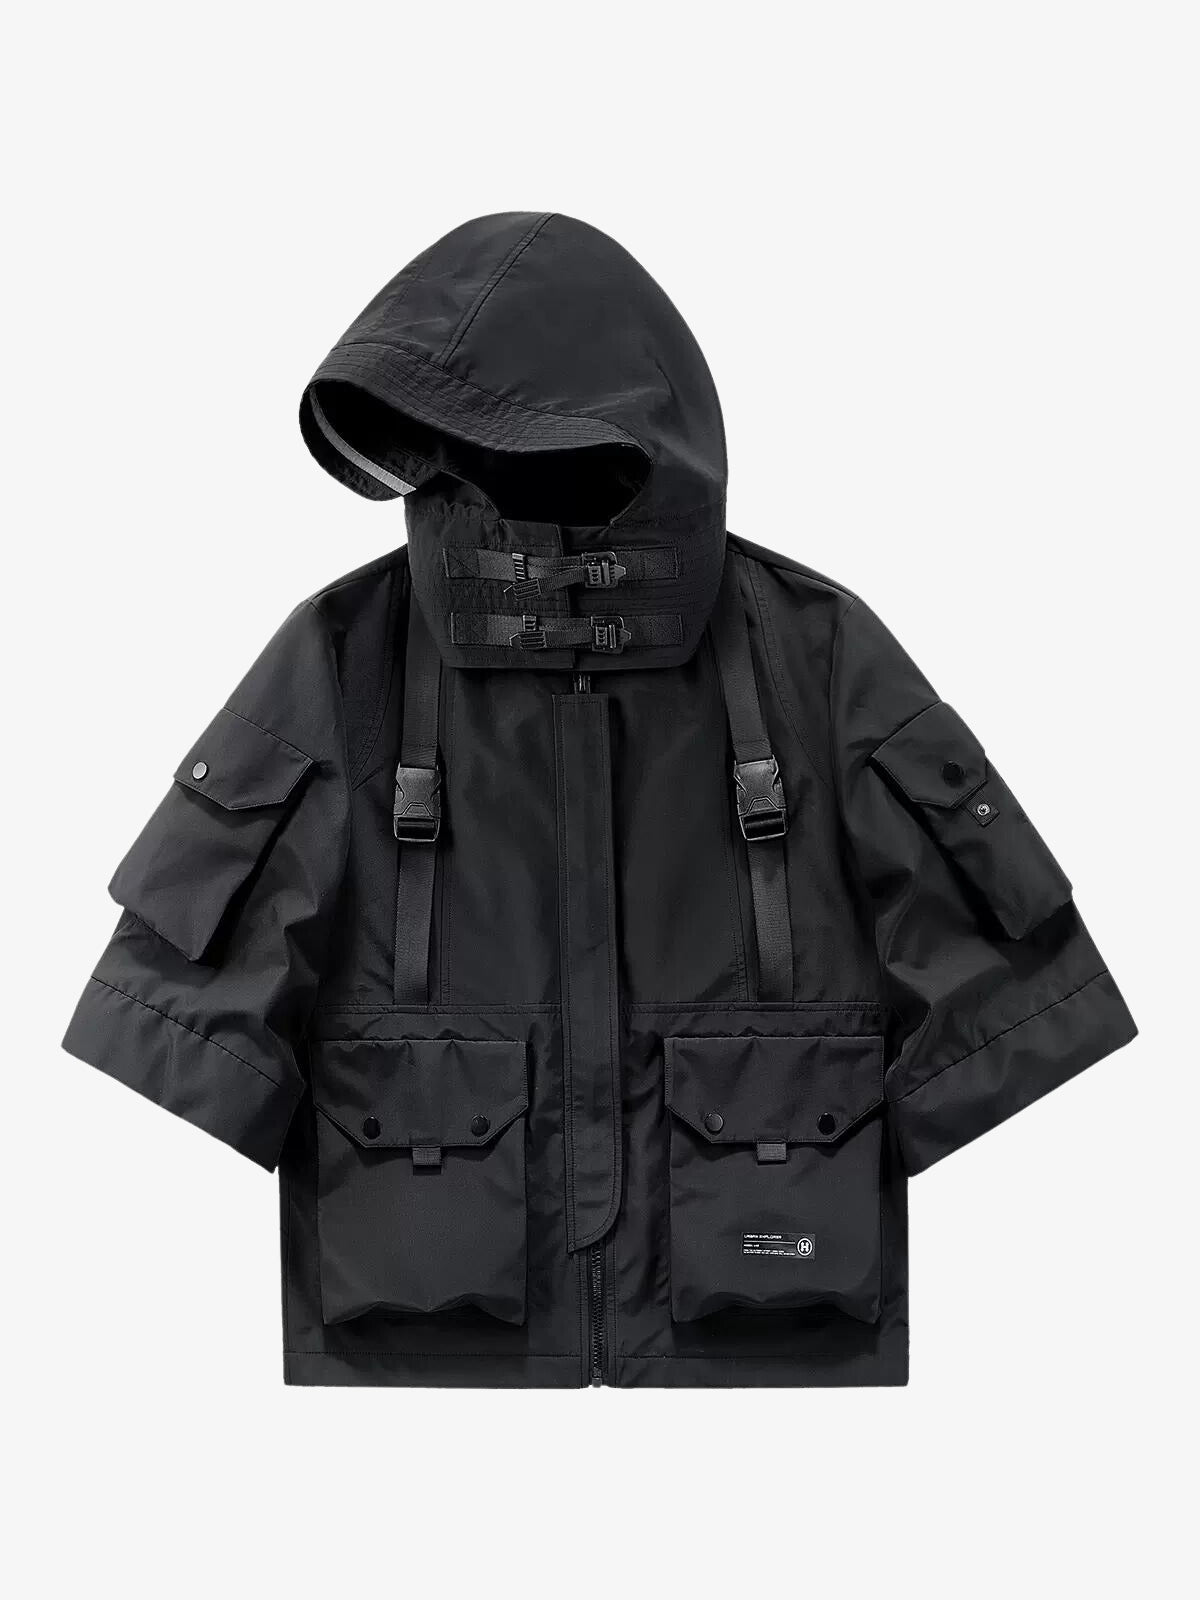 Techwear Multi Pockets Half Sleeved Windproof Jacket